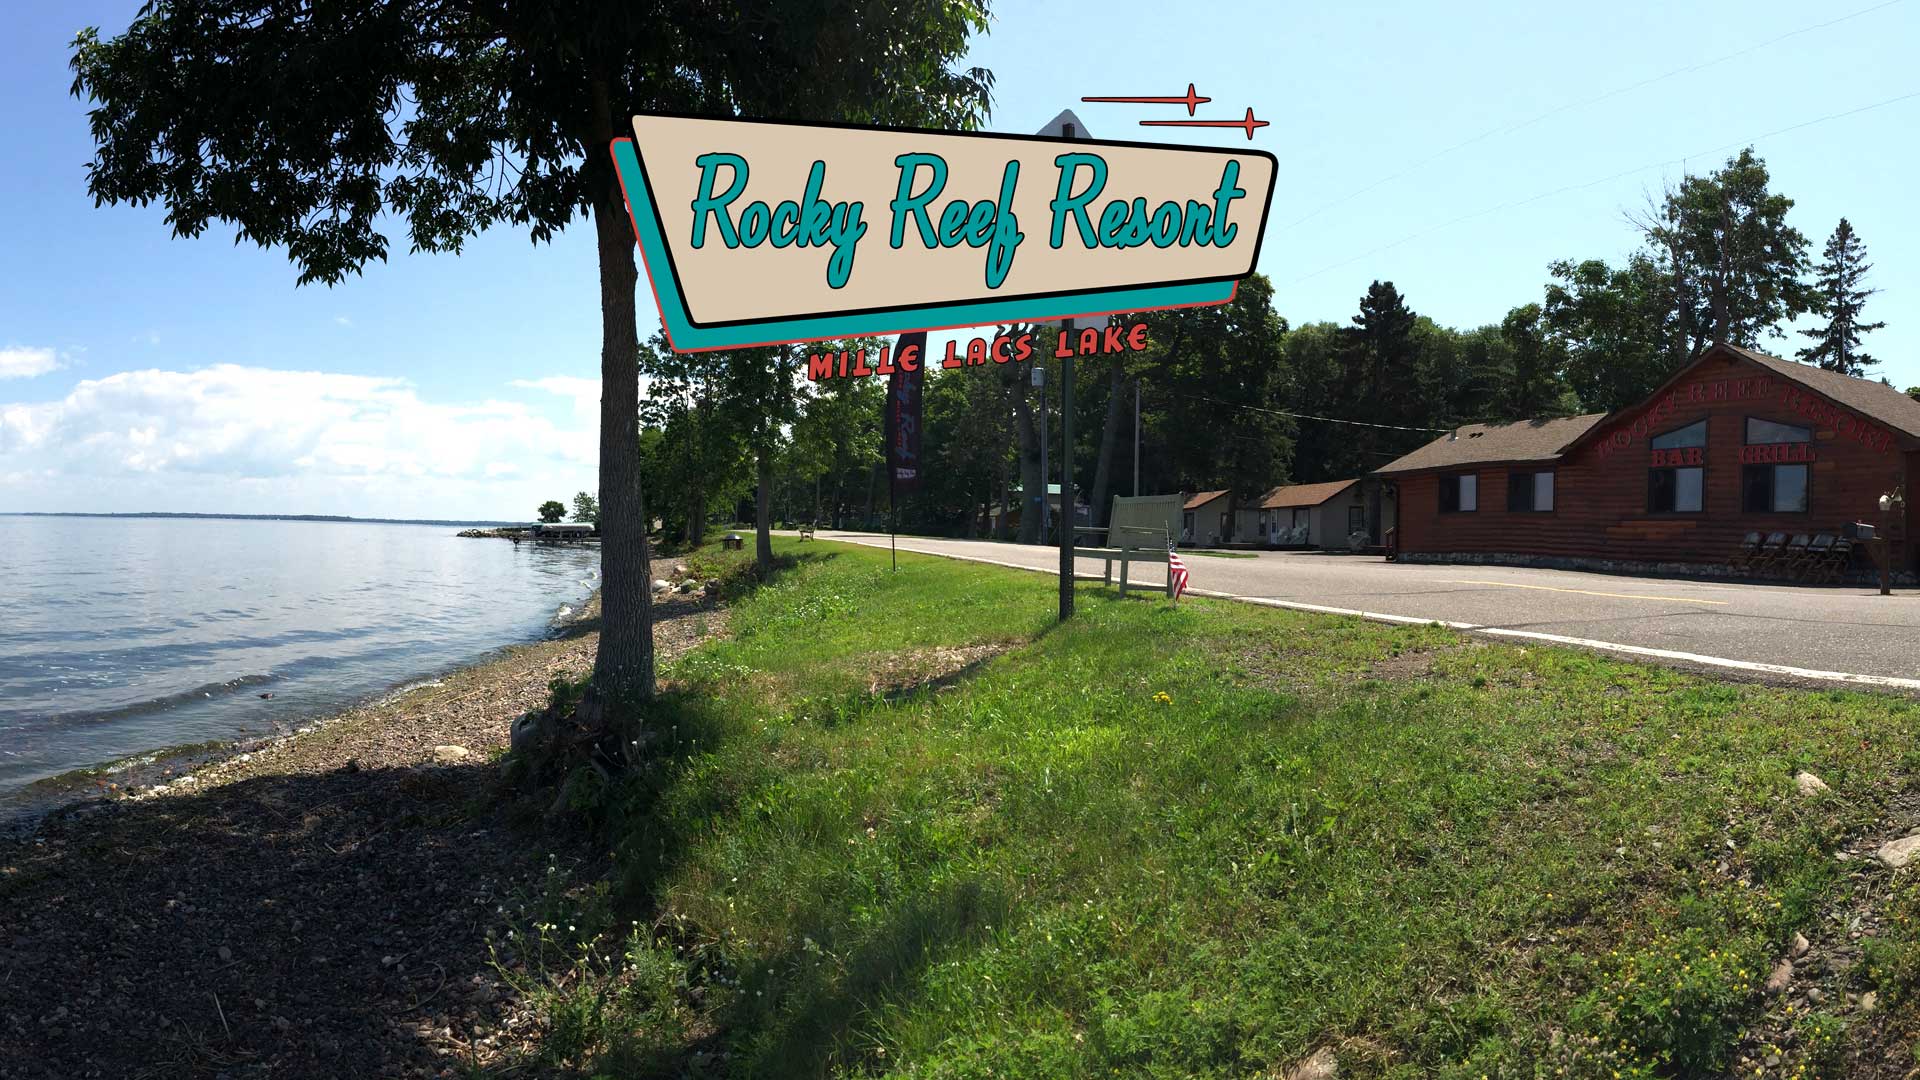 Rocky Reef Resort Lakeside Bar & Grill, Cabin Rentals, Ice Fishing